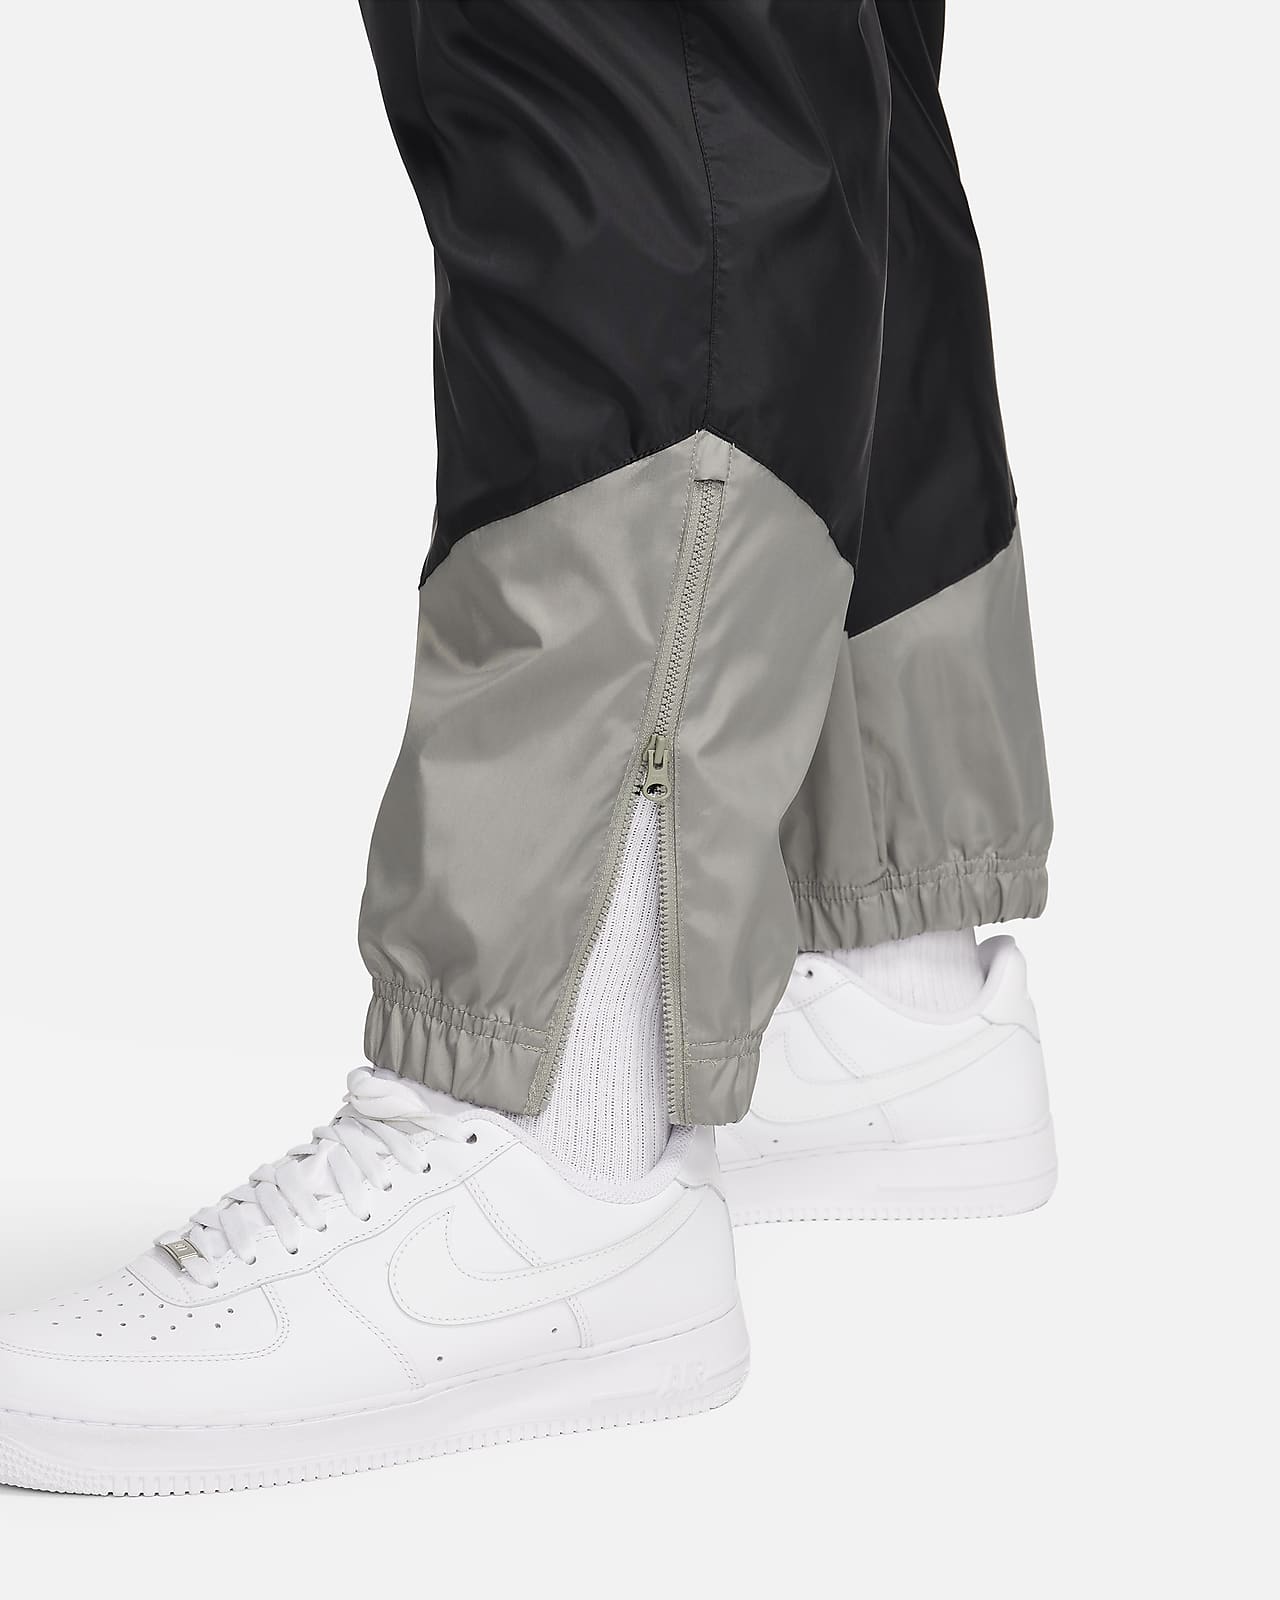 Men's Windrunner Trousers & Tights. Nike CA